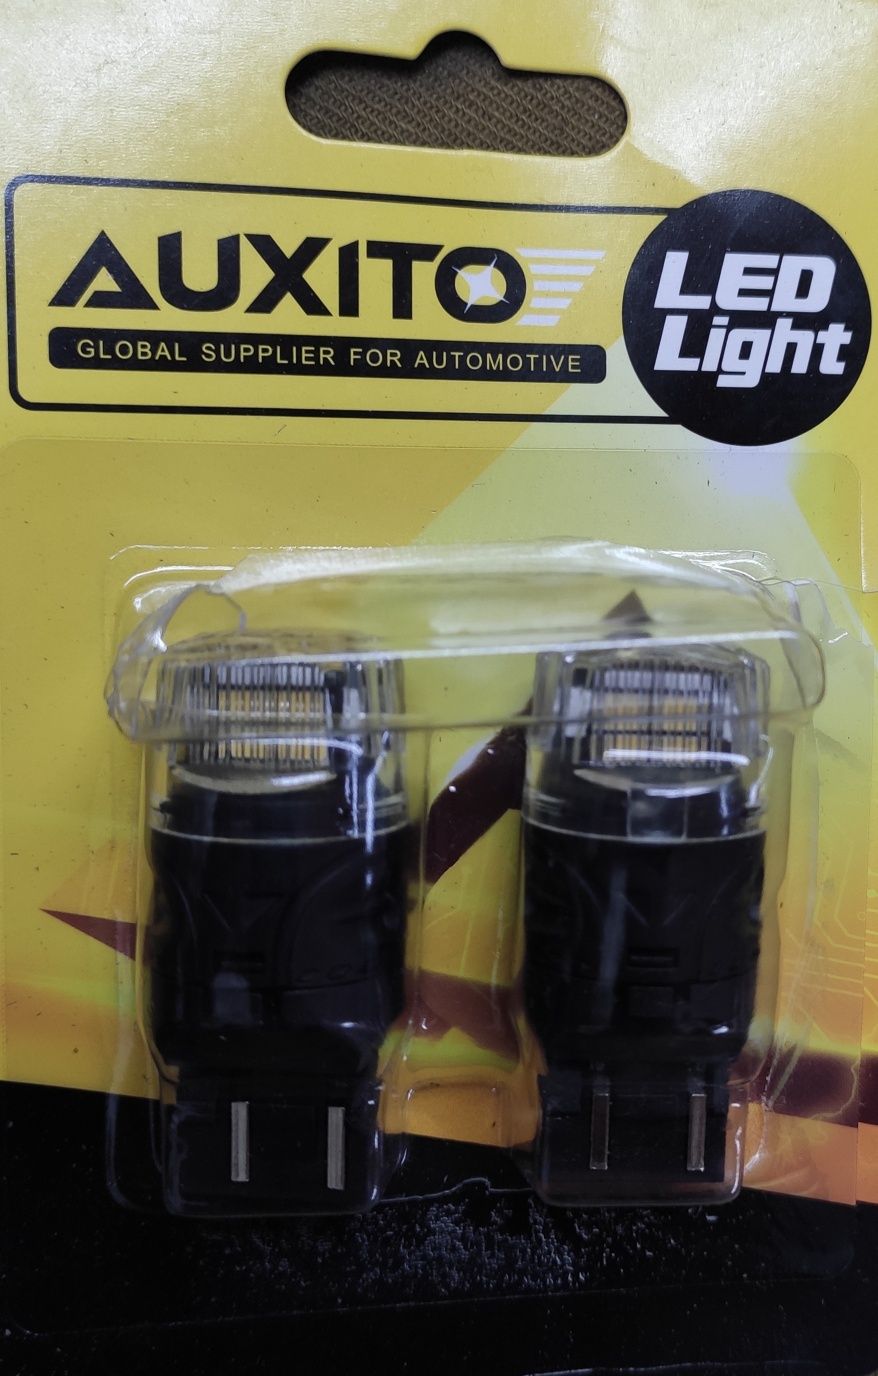 Led лампи AUXITO - габарит, стоп, задній ход, поворот